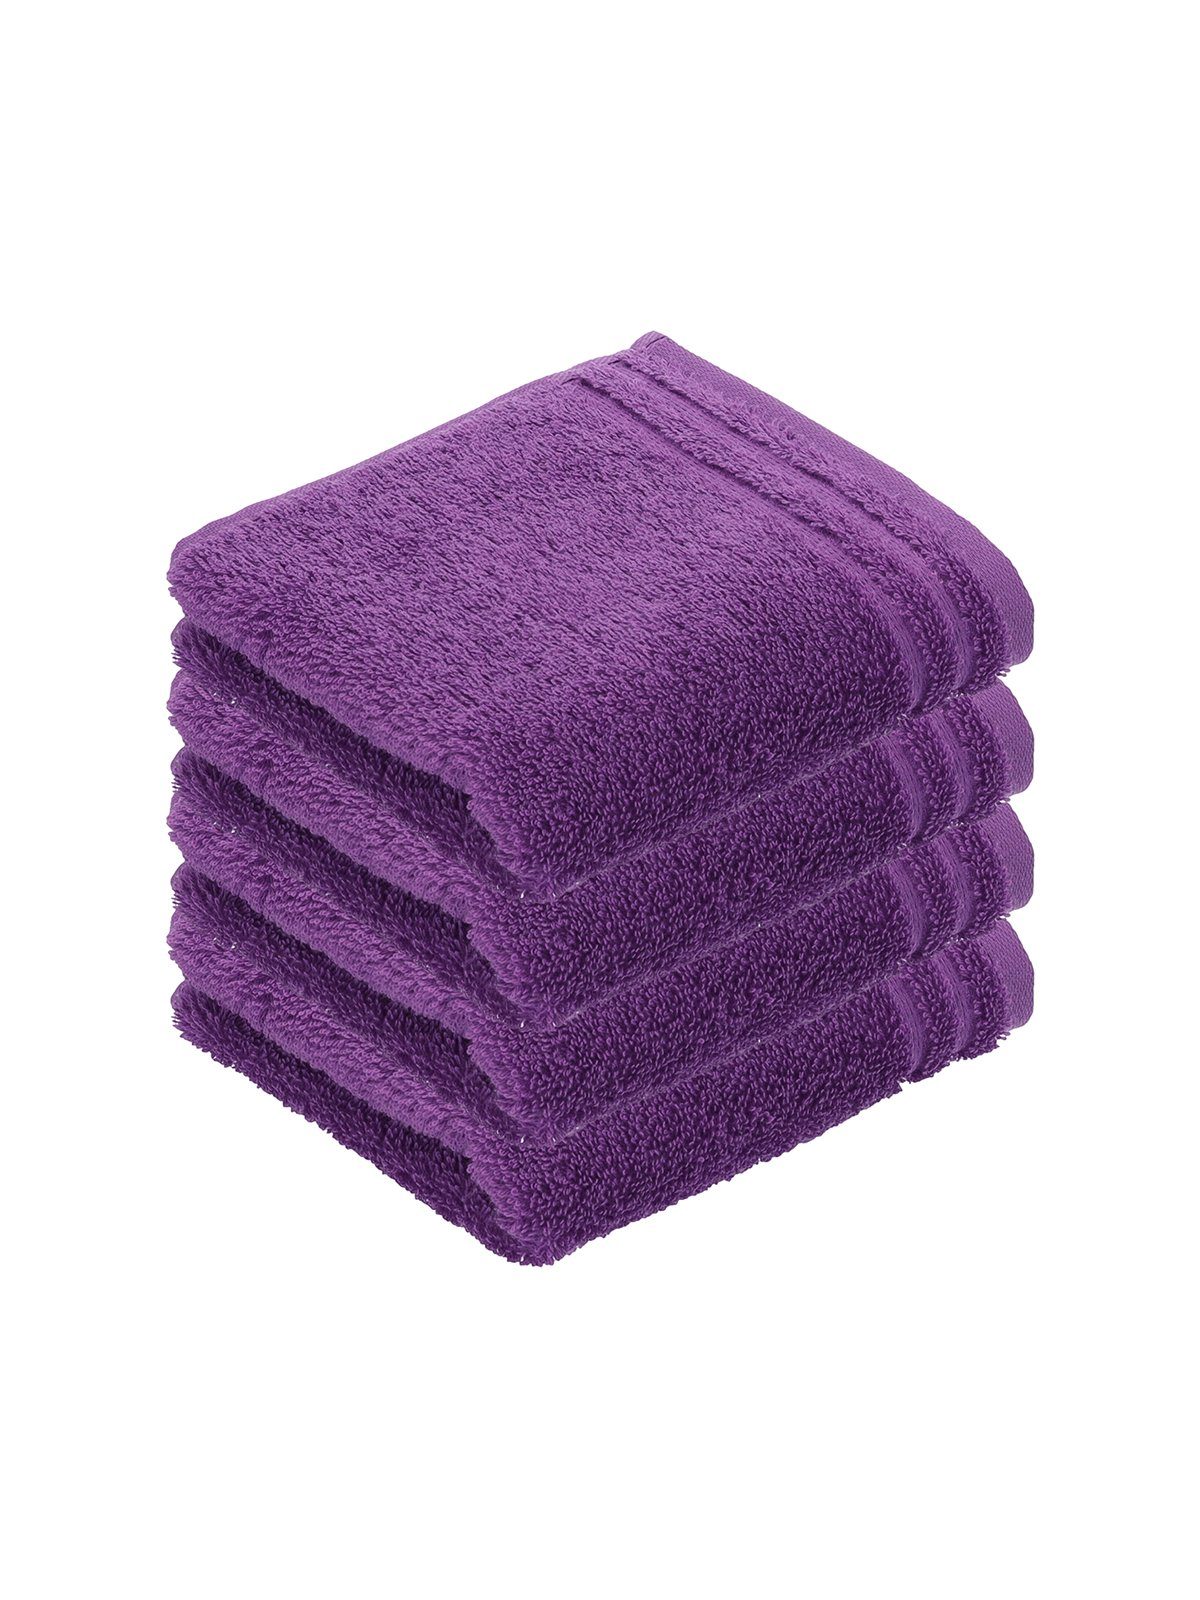 Vossen Handtücher online kaufen | OTTO | Saunahandtücher